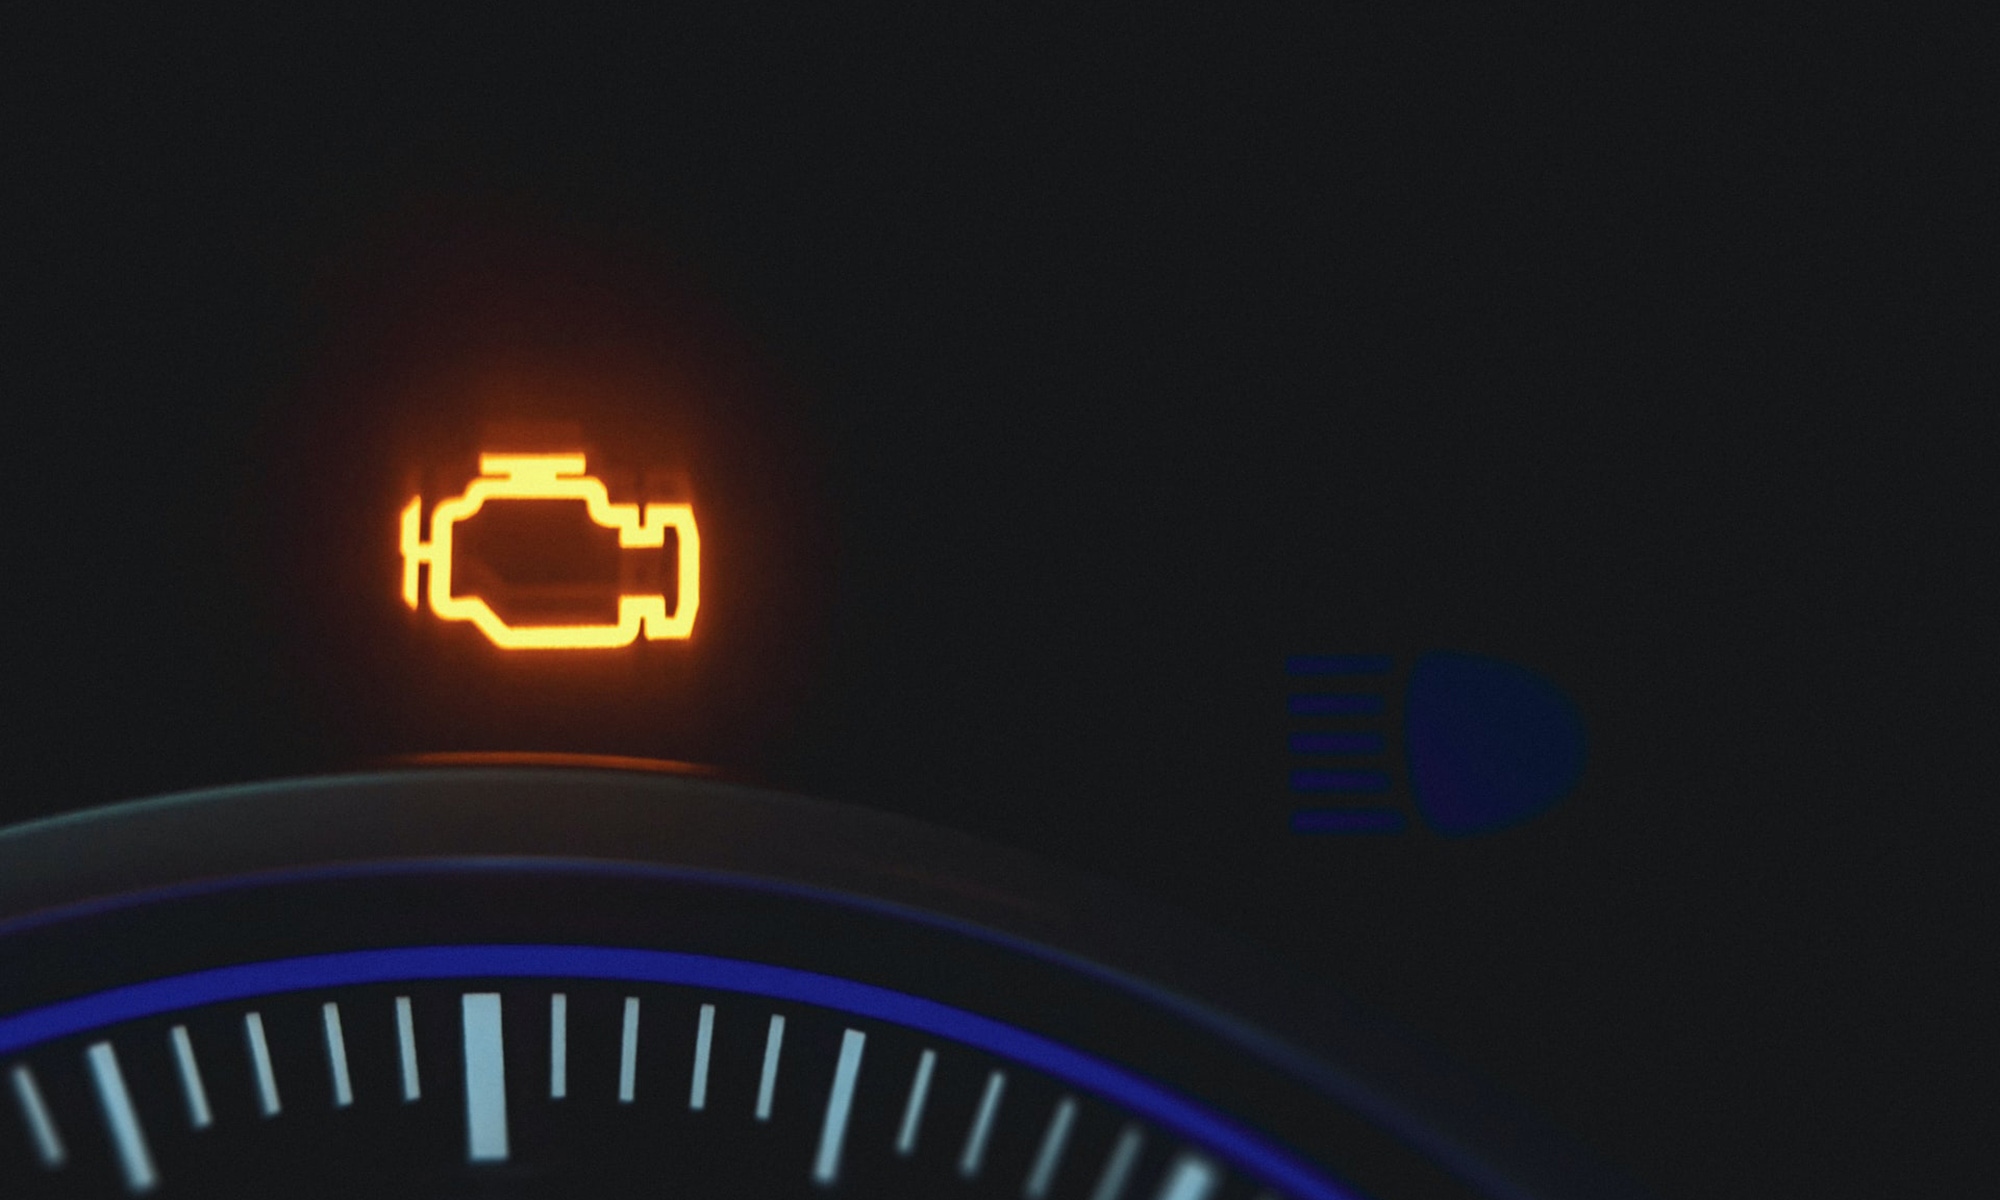 A check engine light illuminated on a car's dashboard.